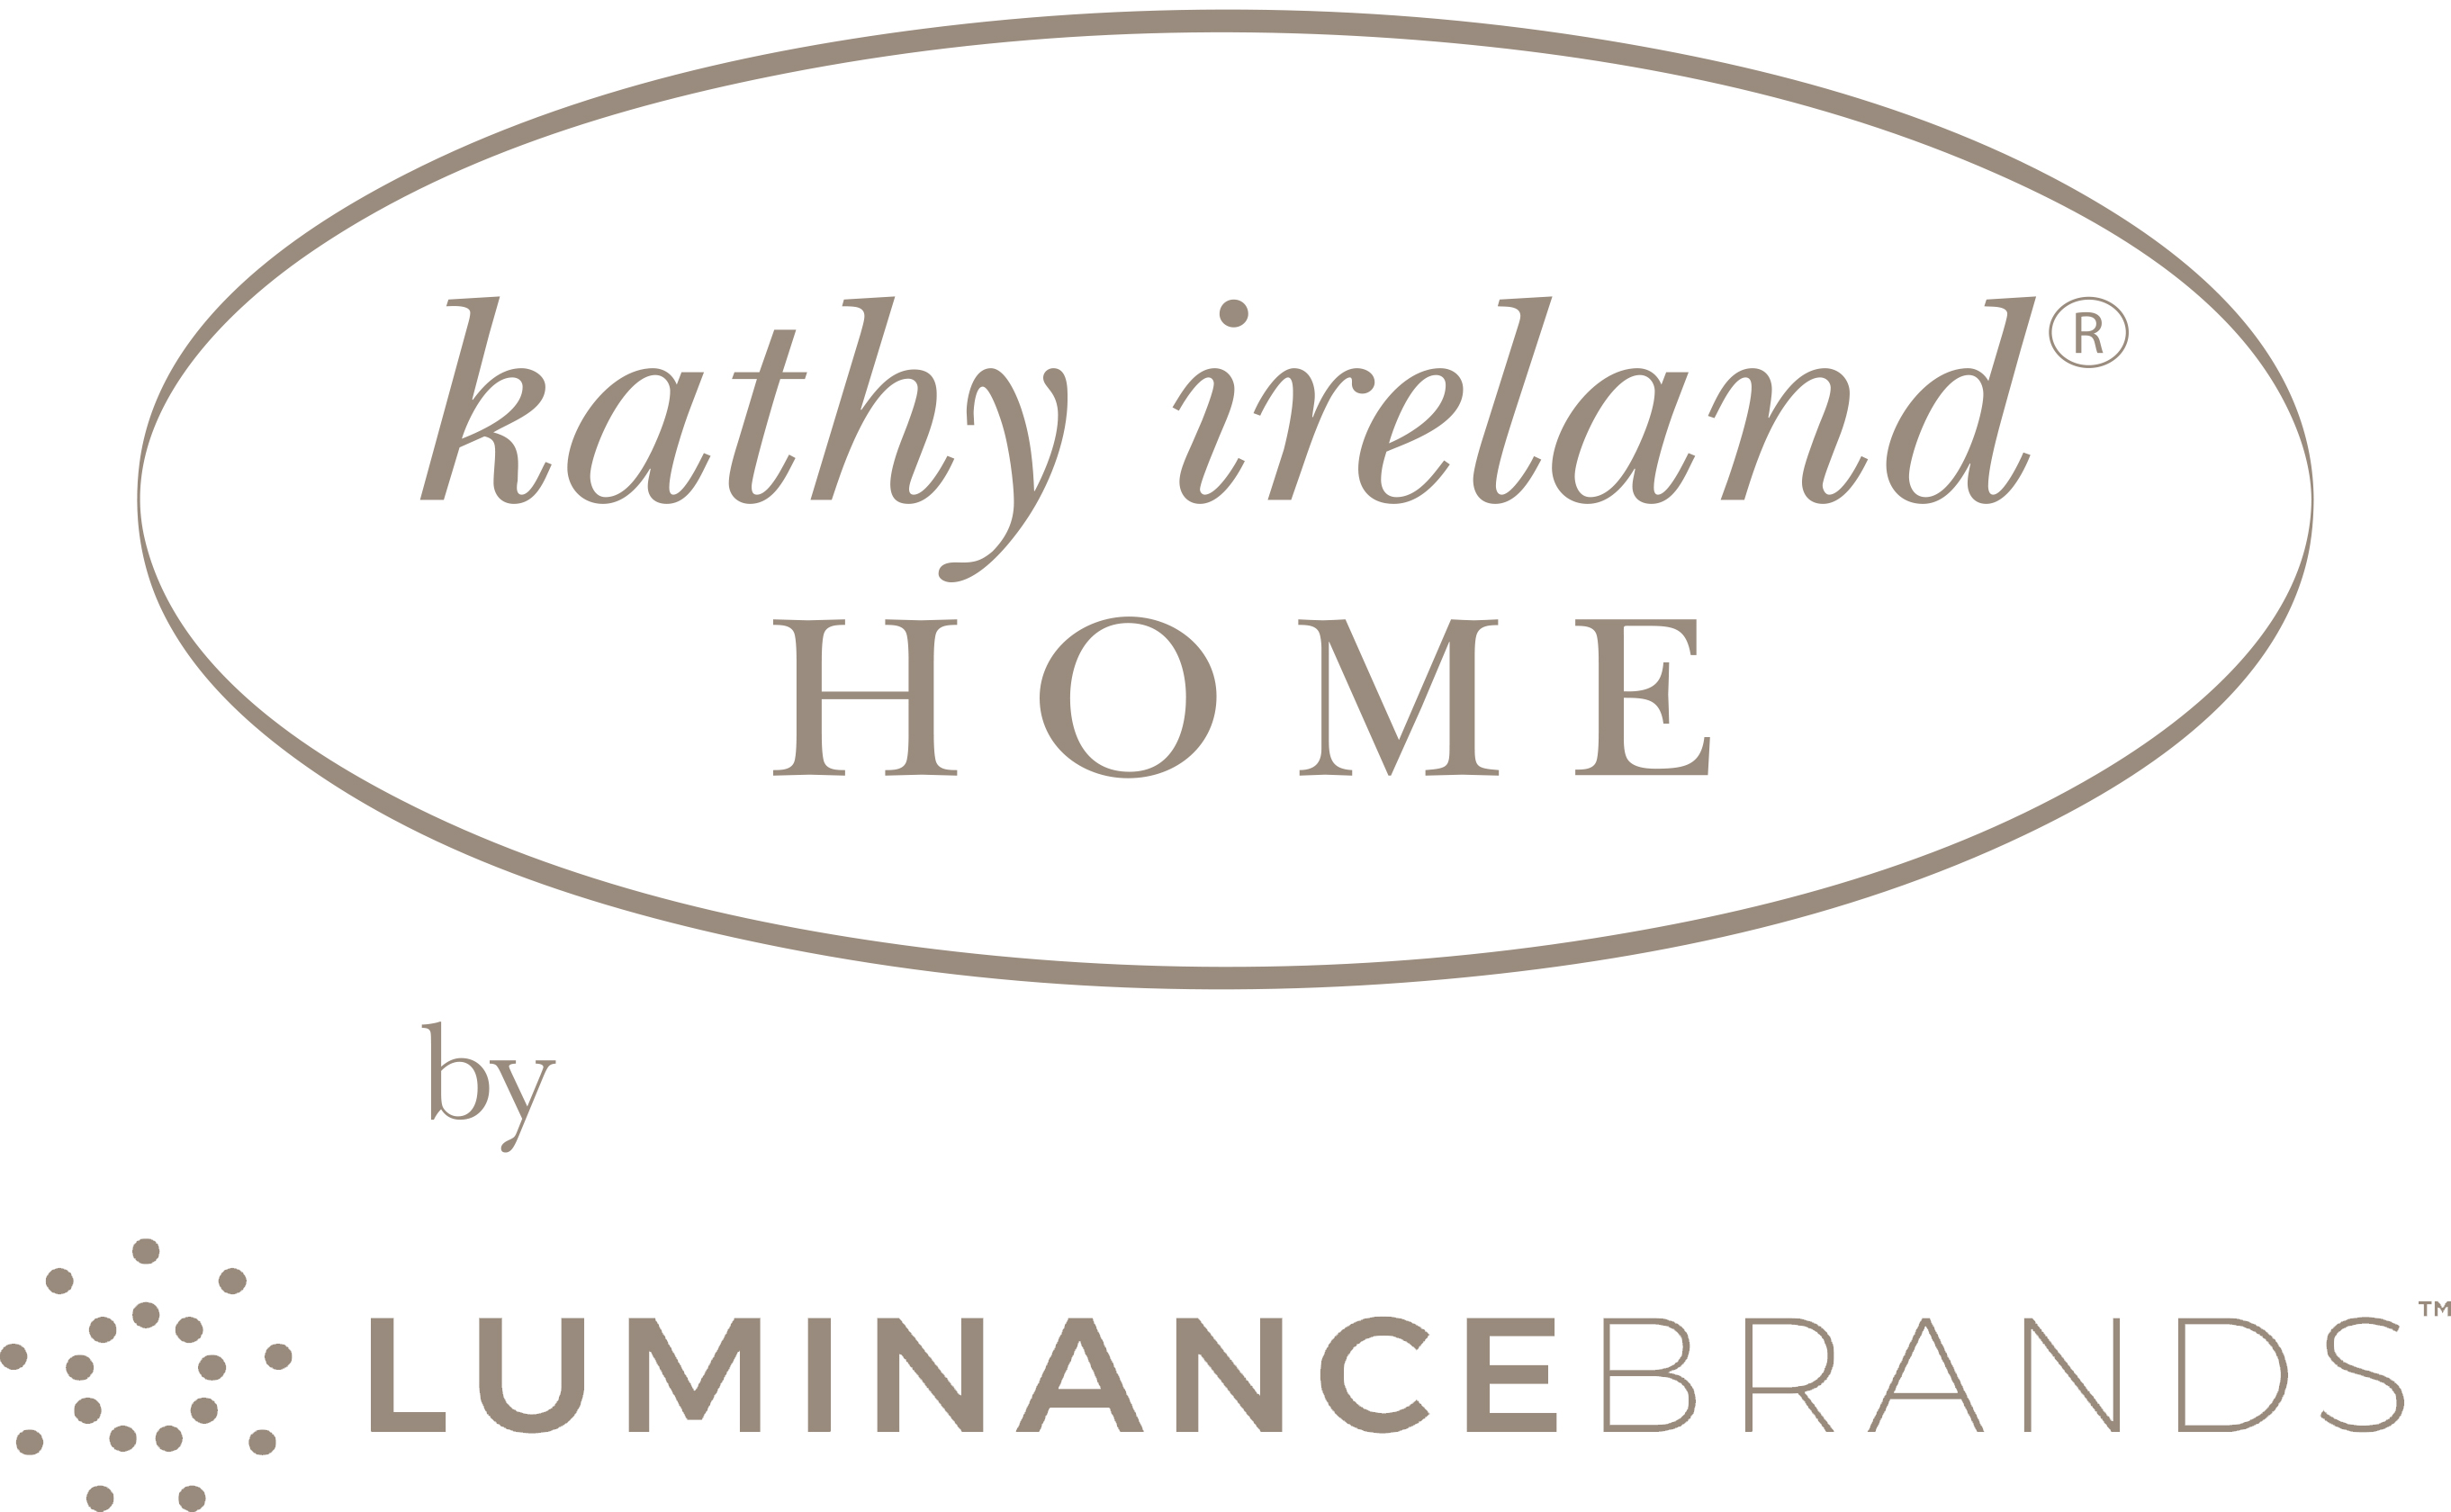 Kathy Ireland Home by Luminance Brands